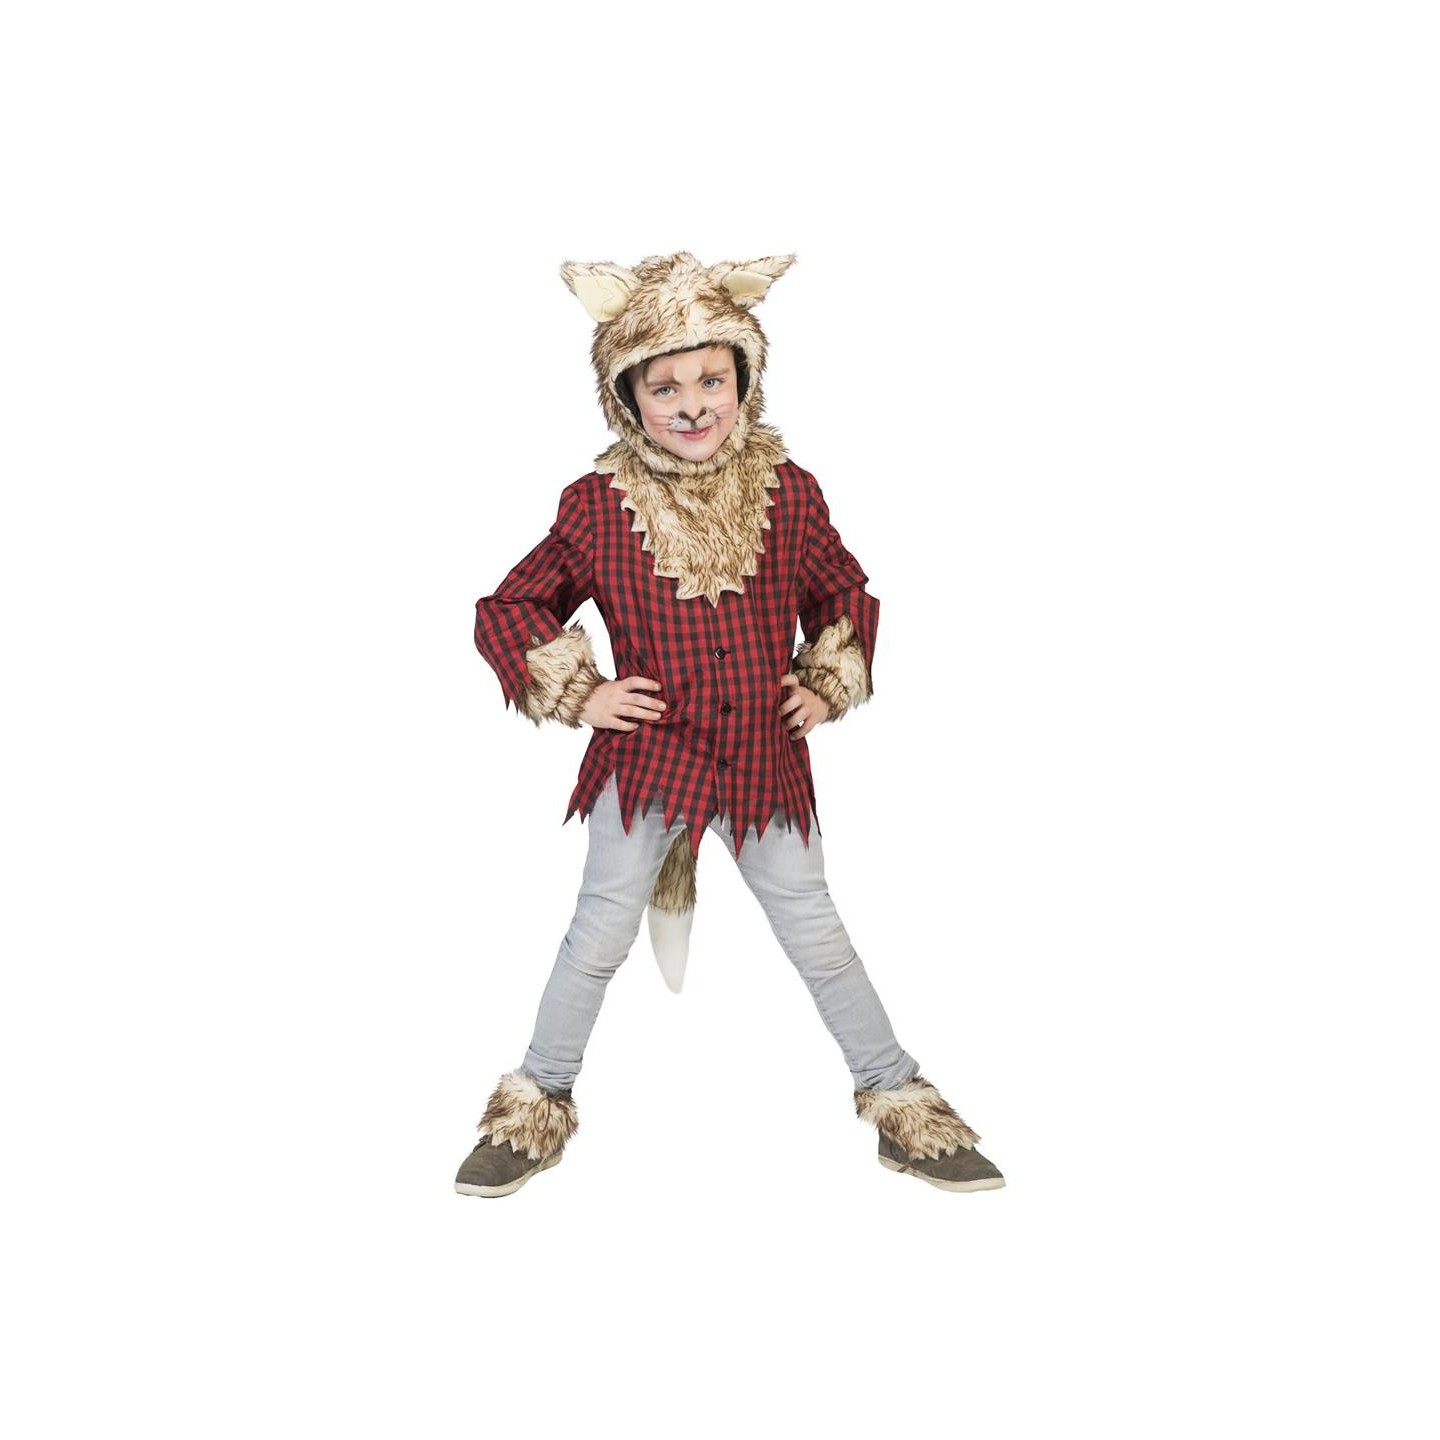 binair barst landelijk Weerwolf kostuum kind | Jokershop.be - Halloween kleding